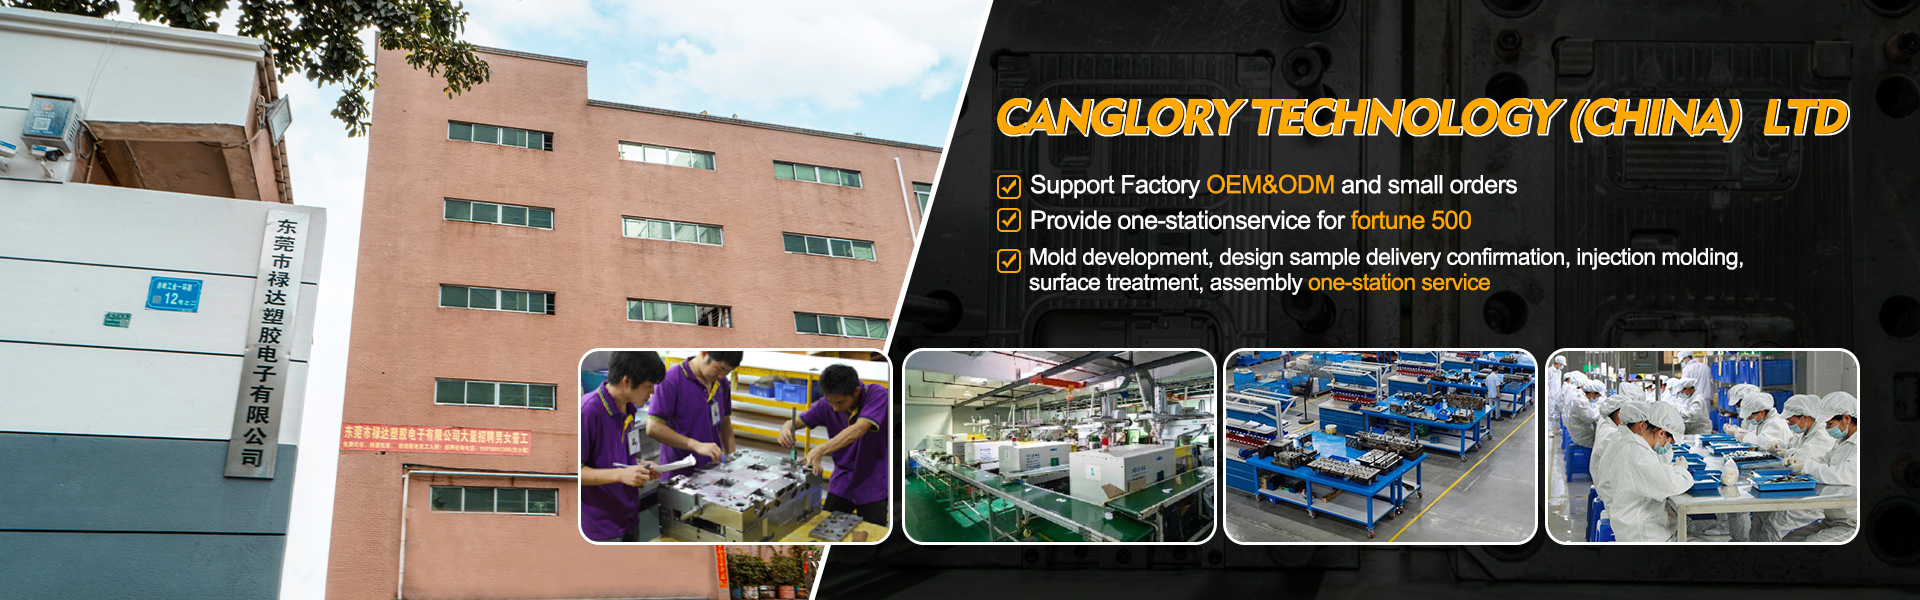 Thuis - Gieten, injectie, originele apparatuurfabrikant|canglory -technologie (China) Ltd